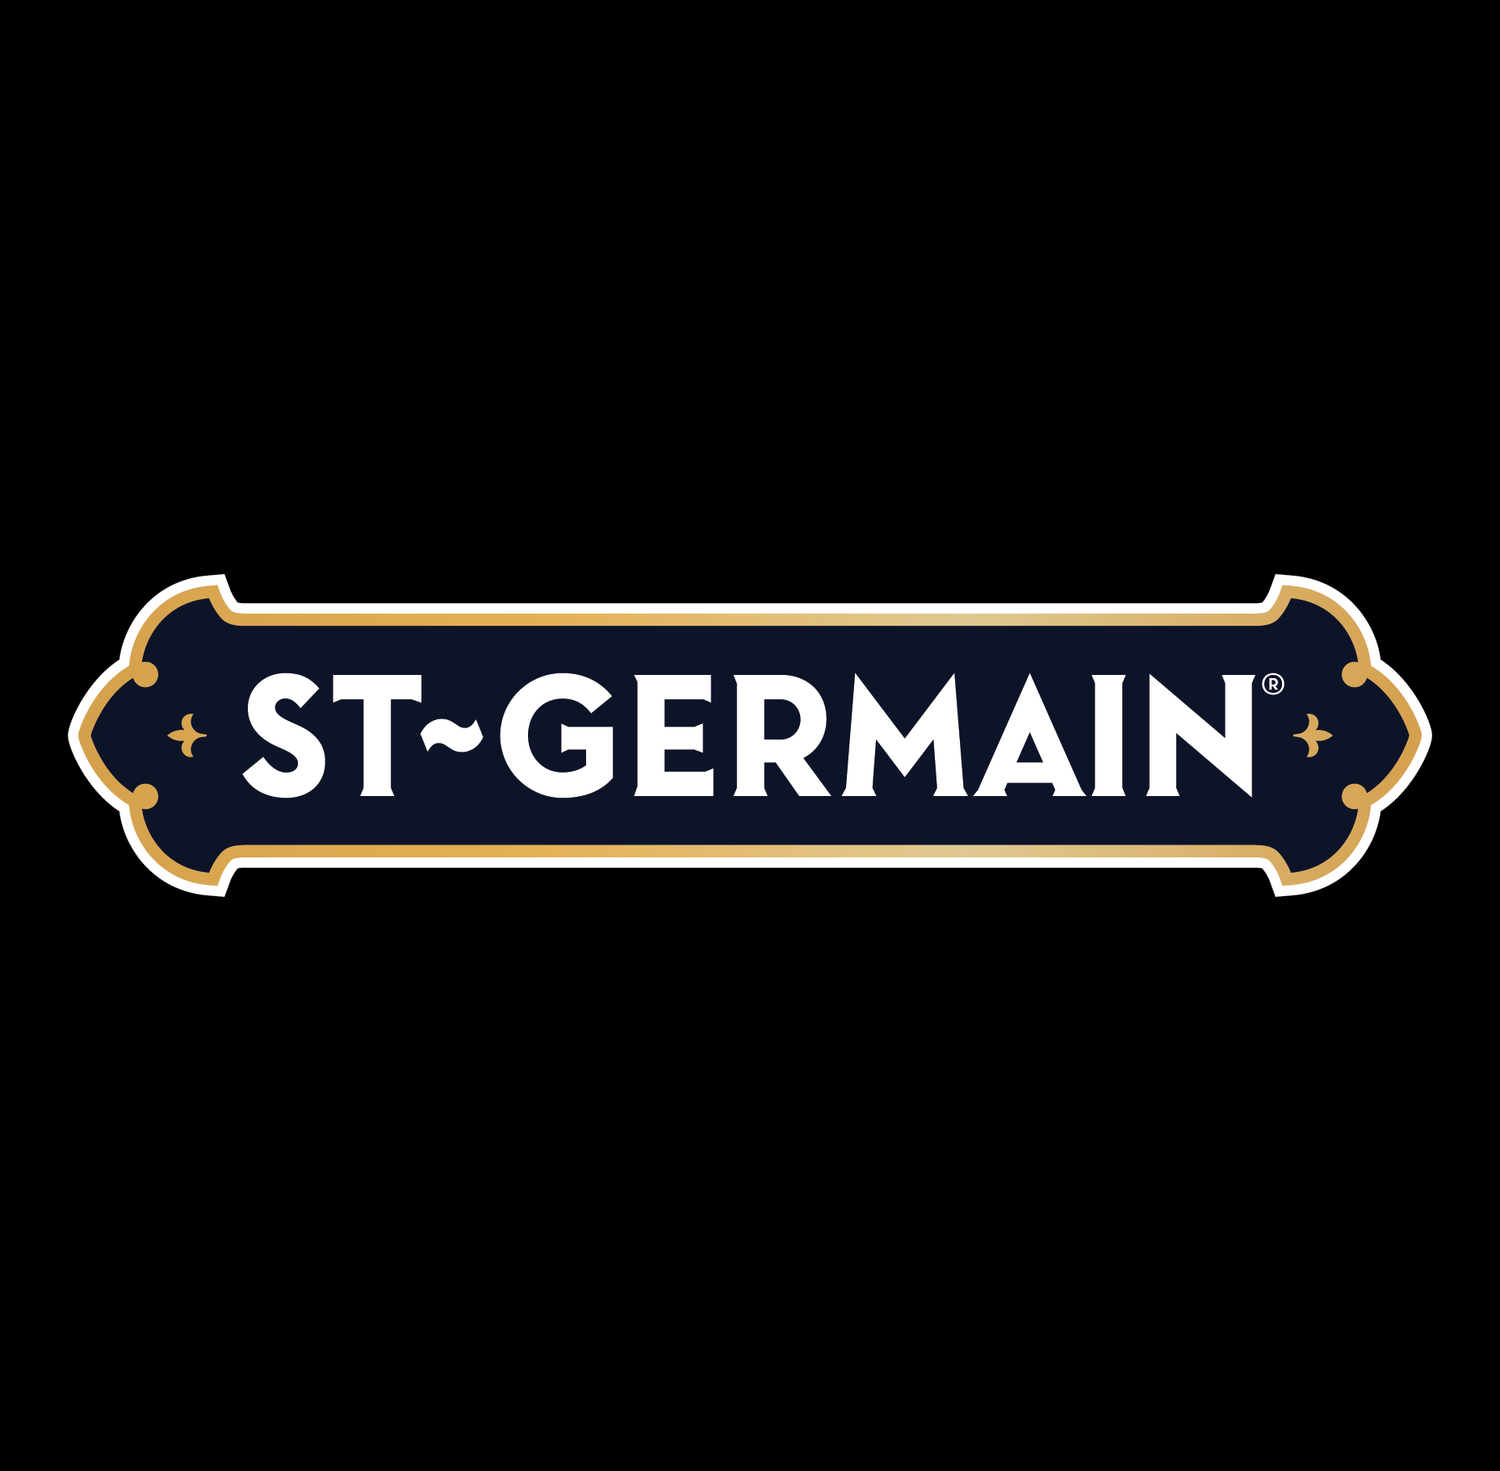 St. Germain Logos